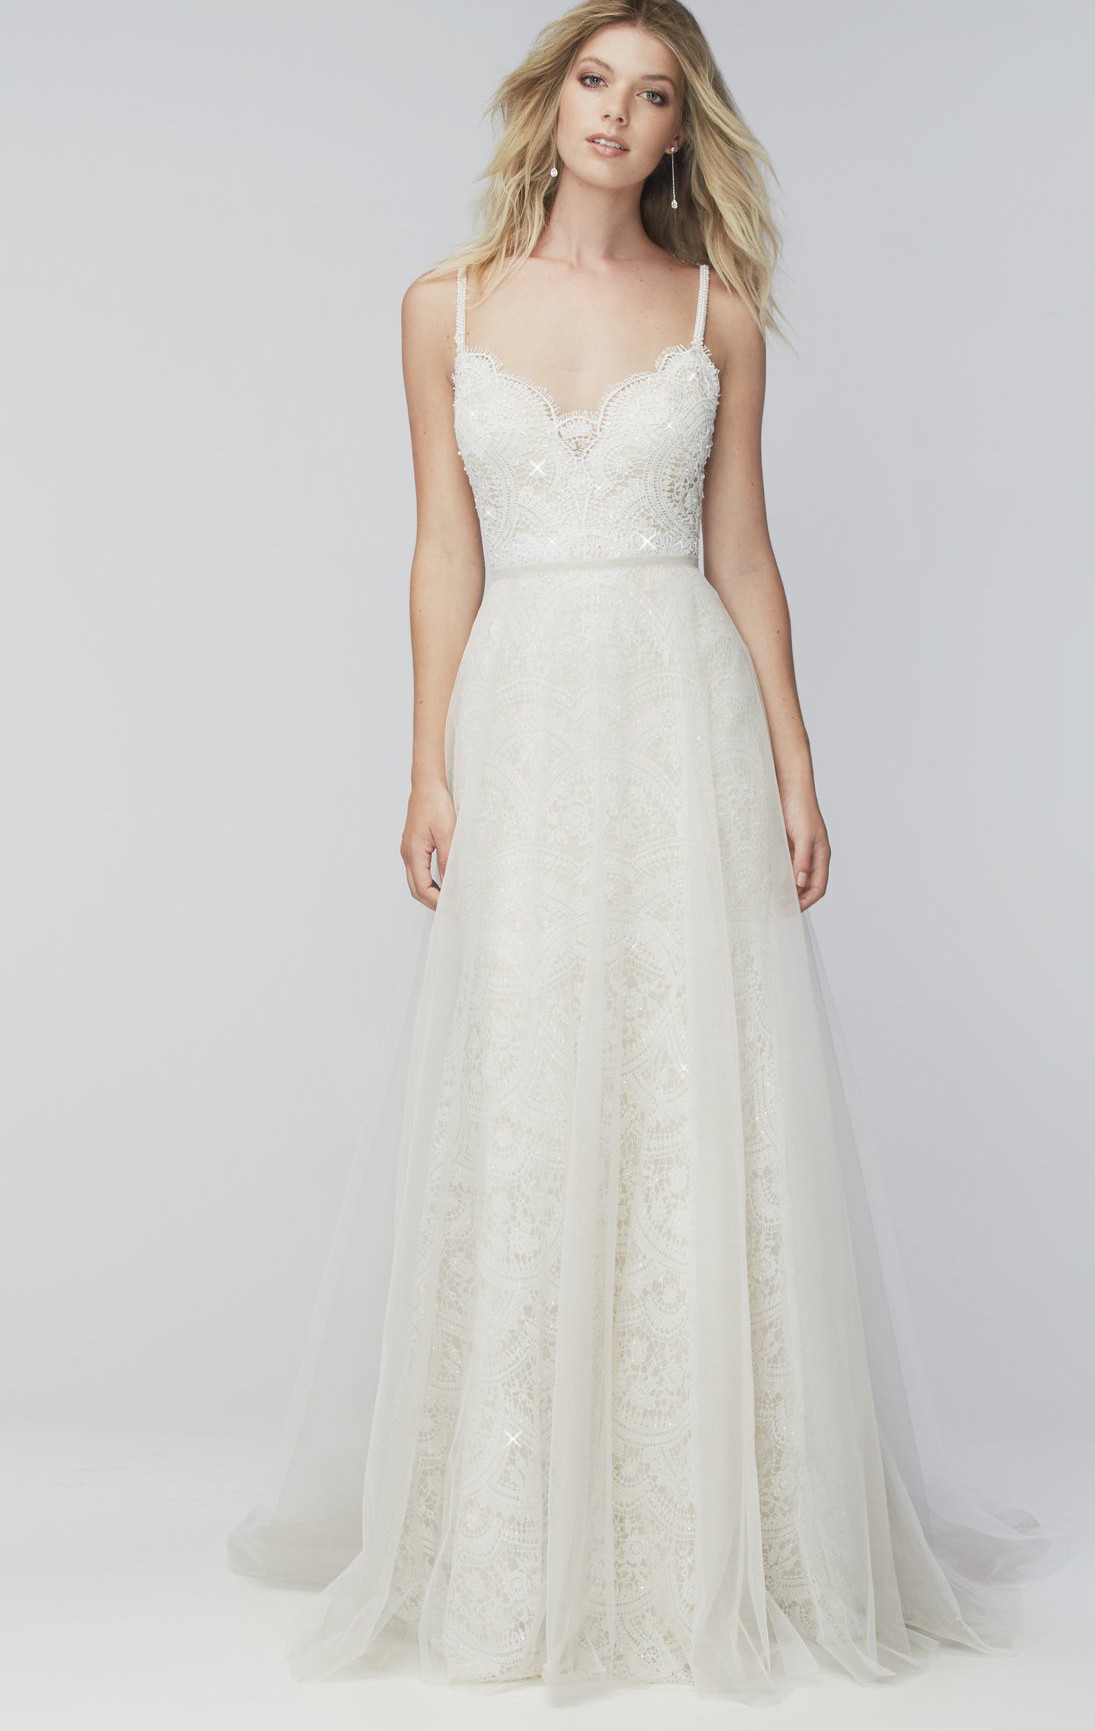 Watters Wtoo Windsor overskirt Wedding Dress on Sale 32% Off